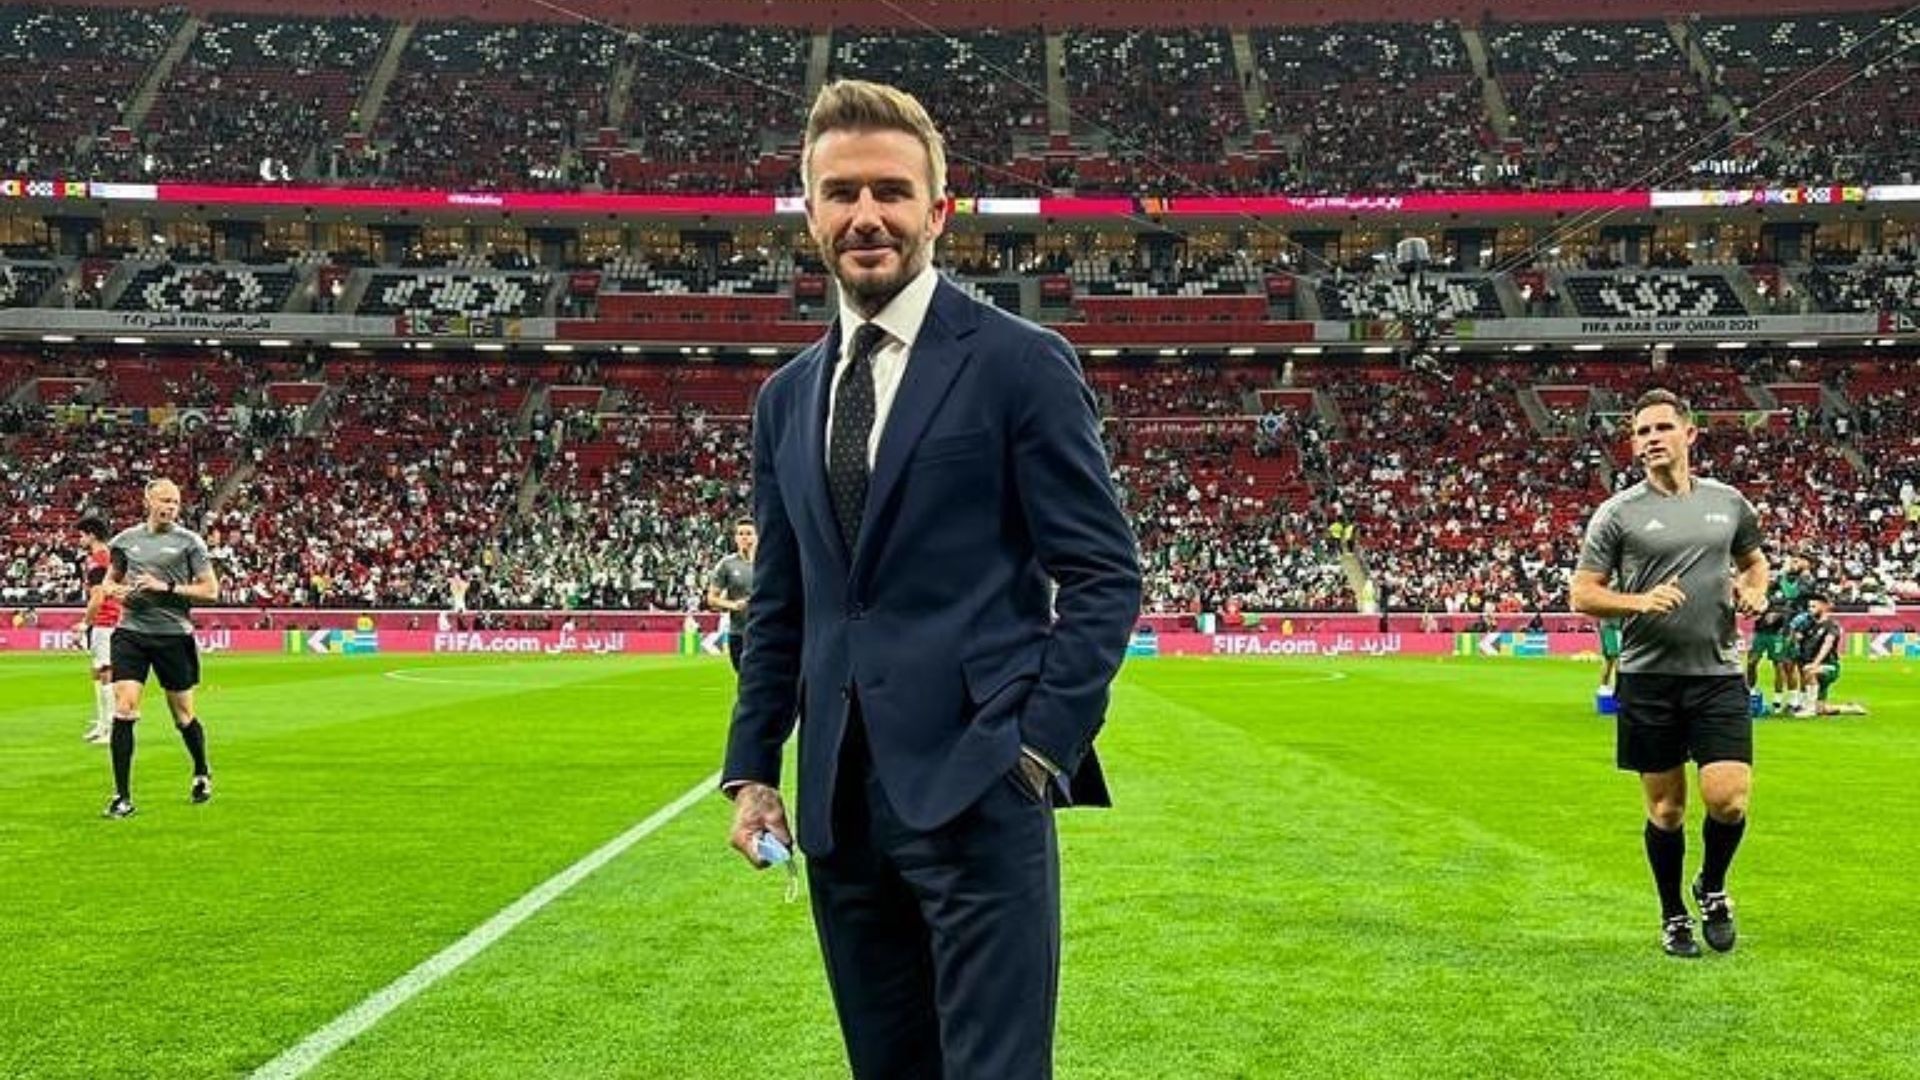 Prominent investor: David Beckham